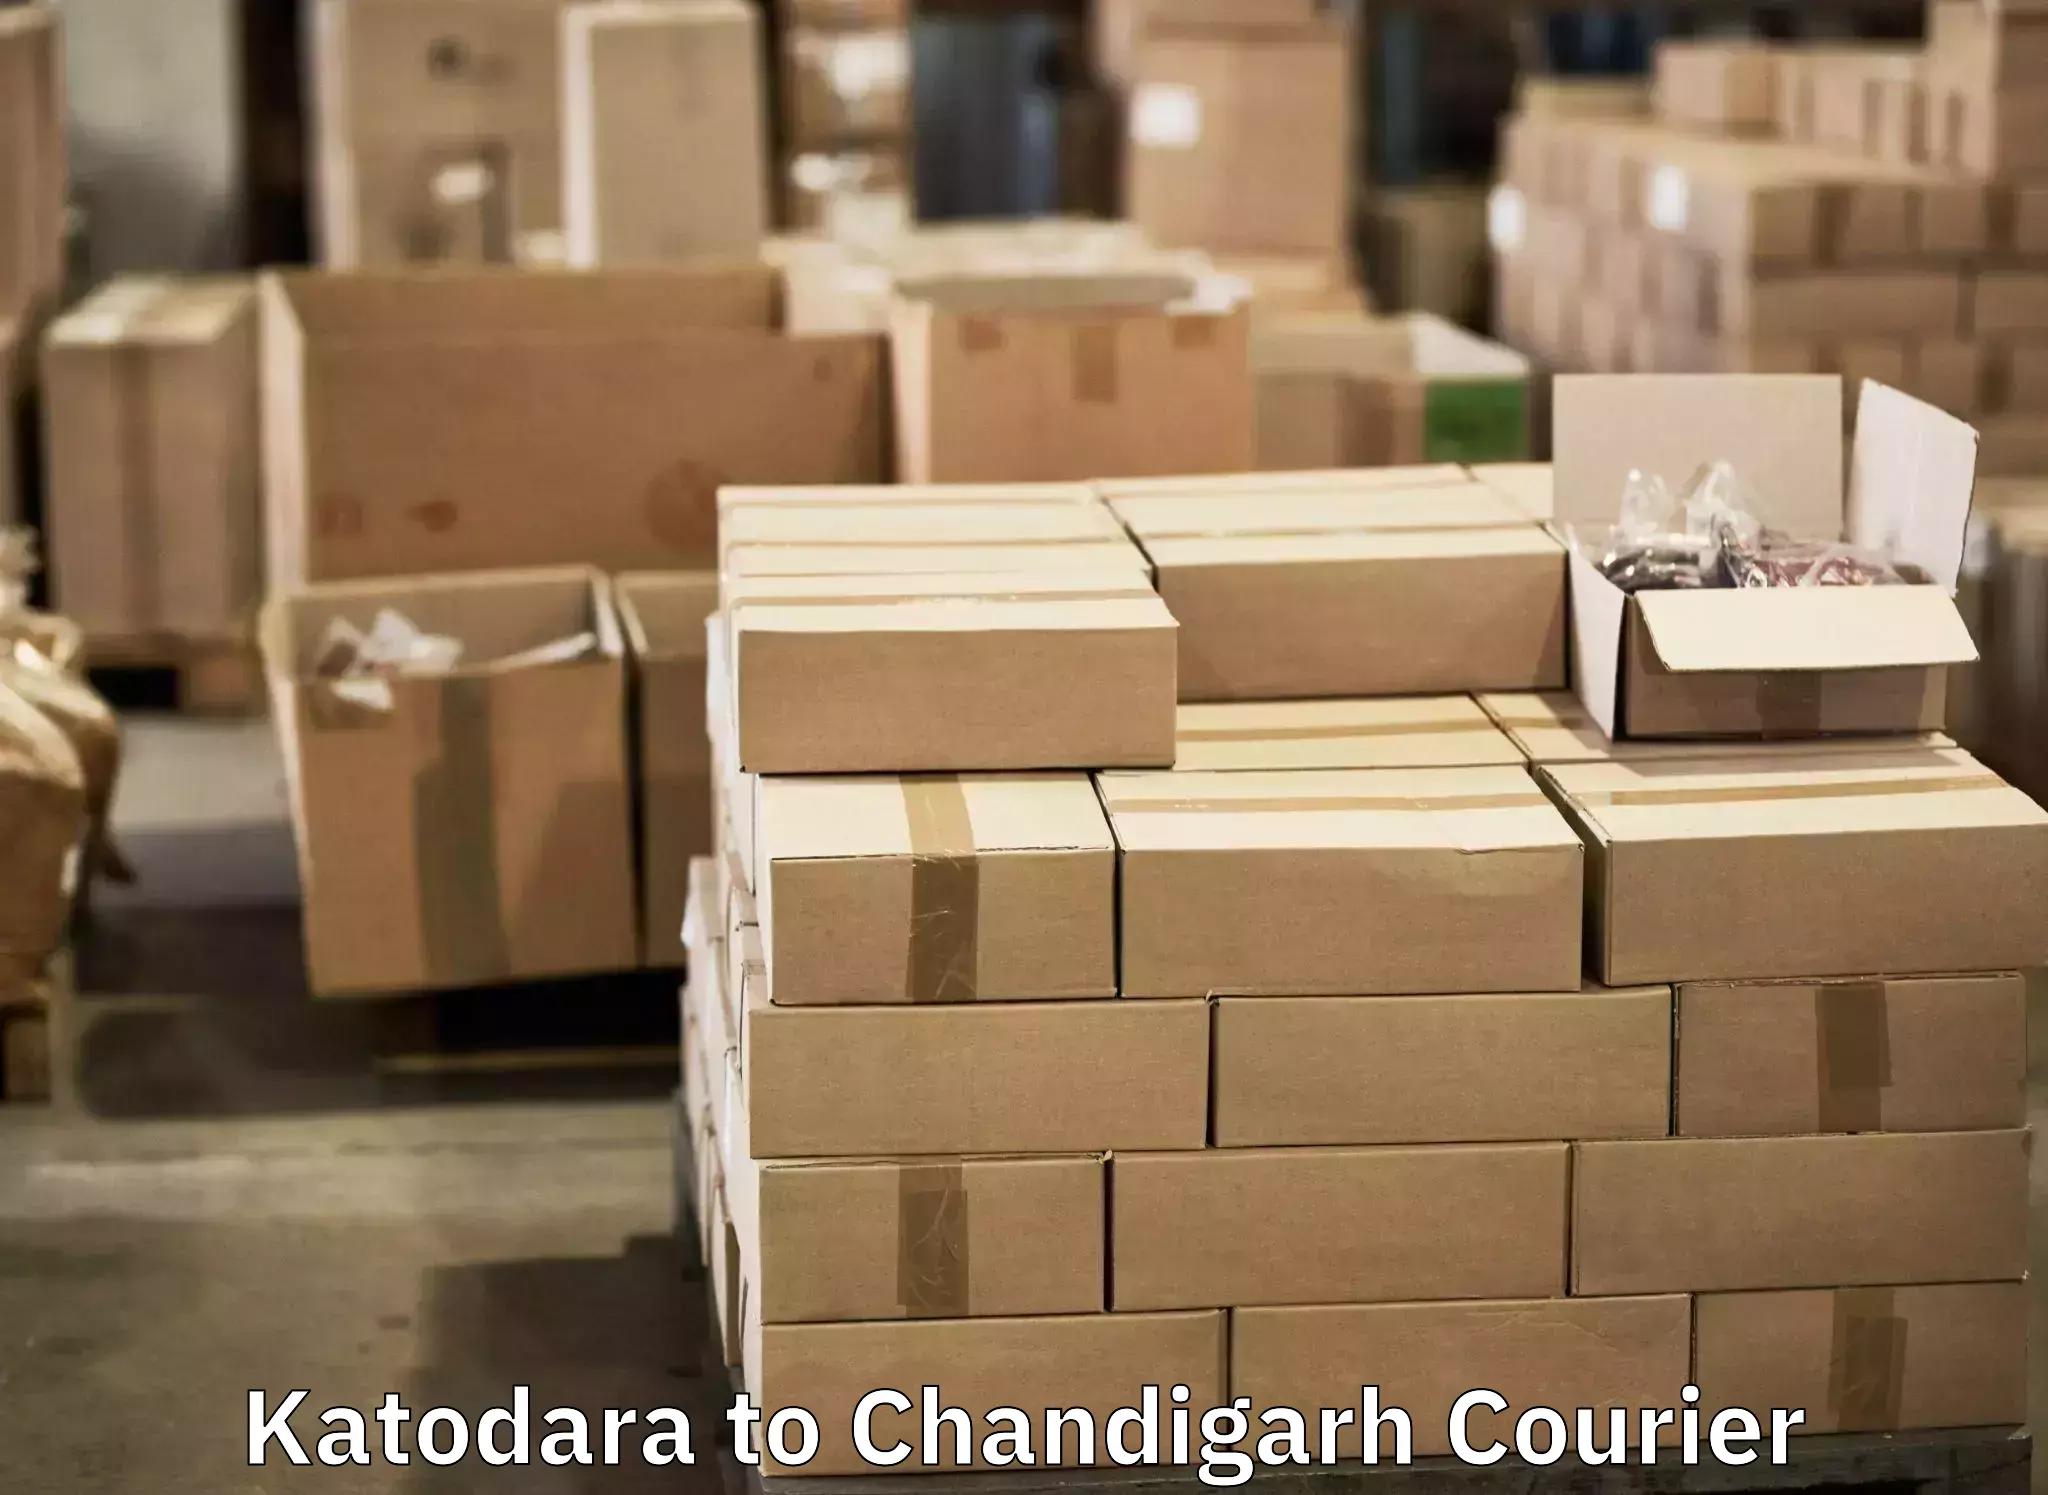 Same day luggage service Katodara to Chandigarh